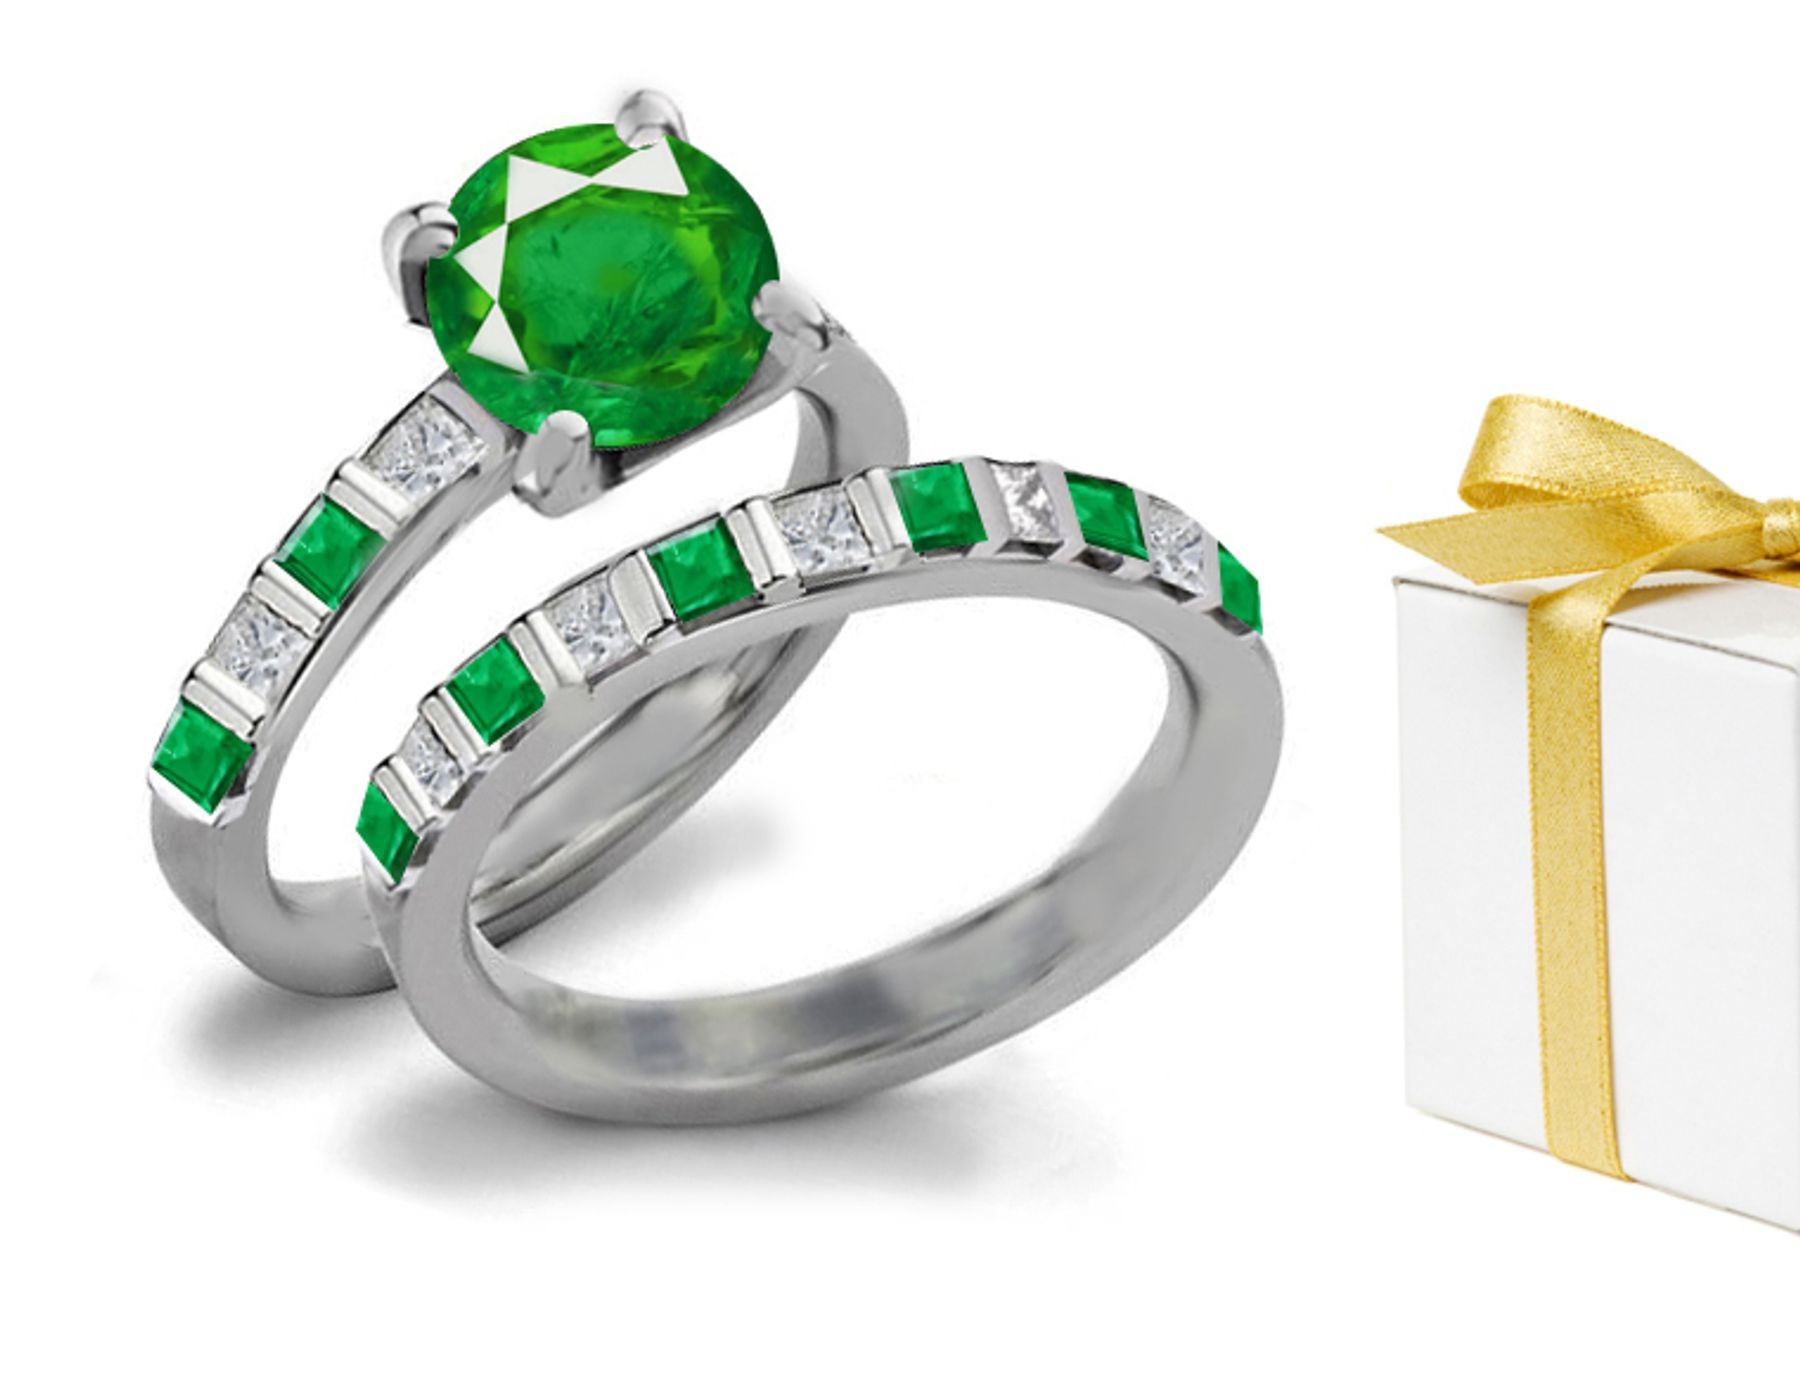 Prices Are According To Actual Weight: Precious Gemstone Bar Set Dark Green Round Emerald & Diamond Ring in 14k White Gold